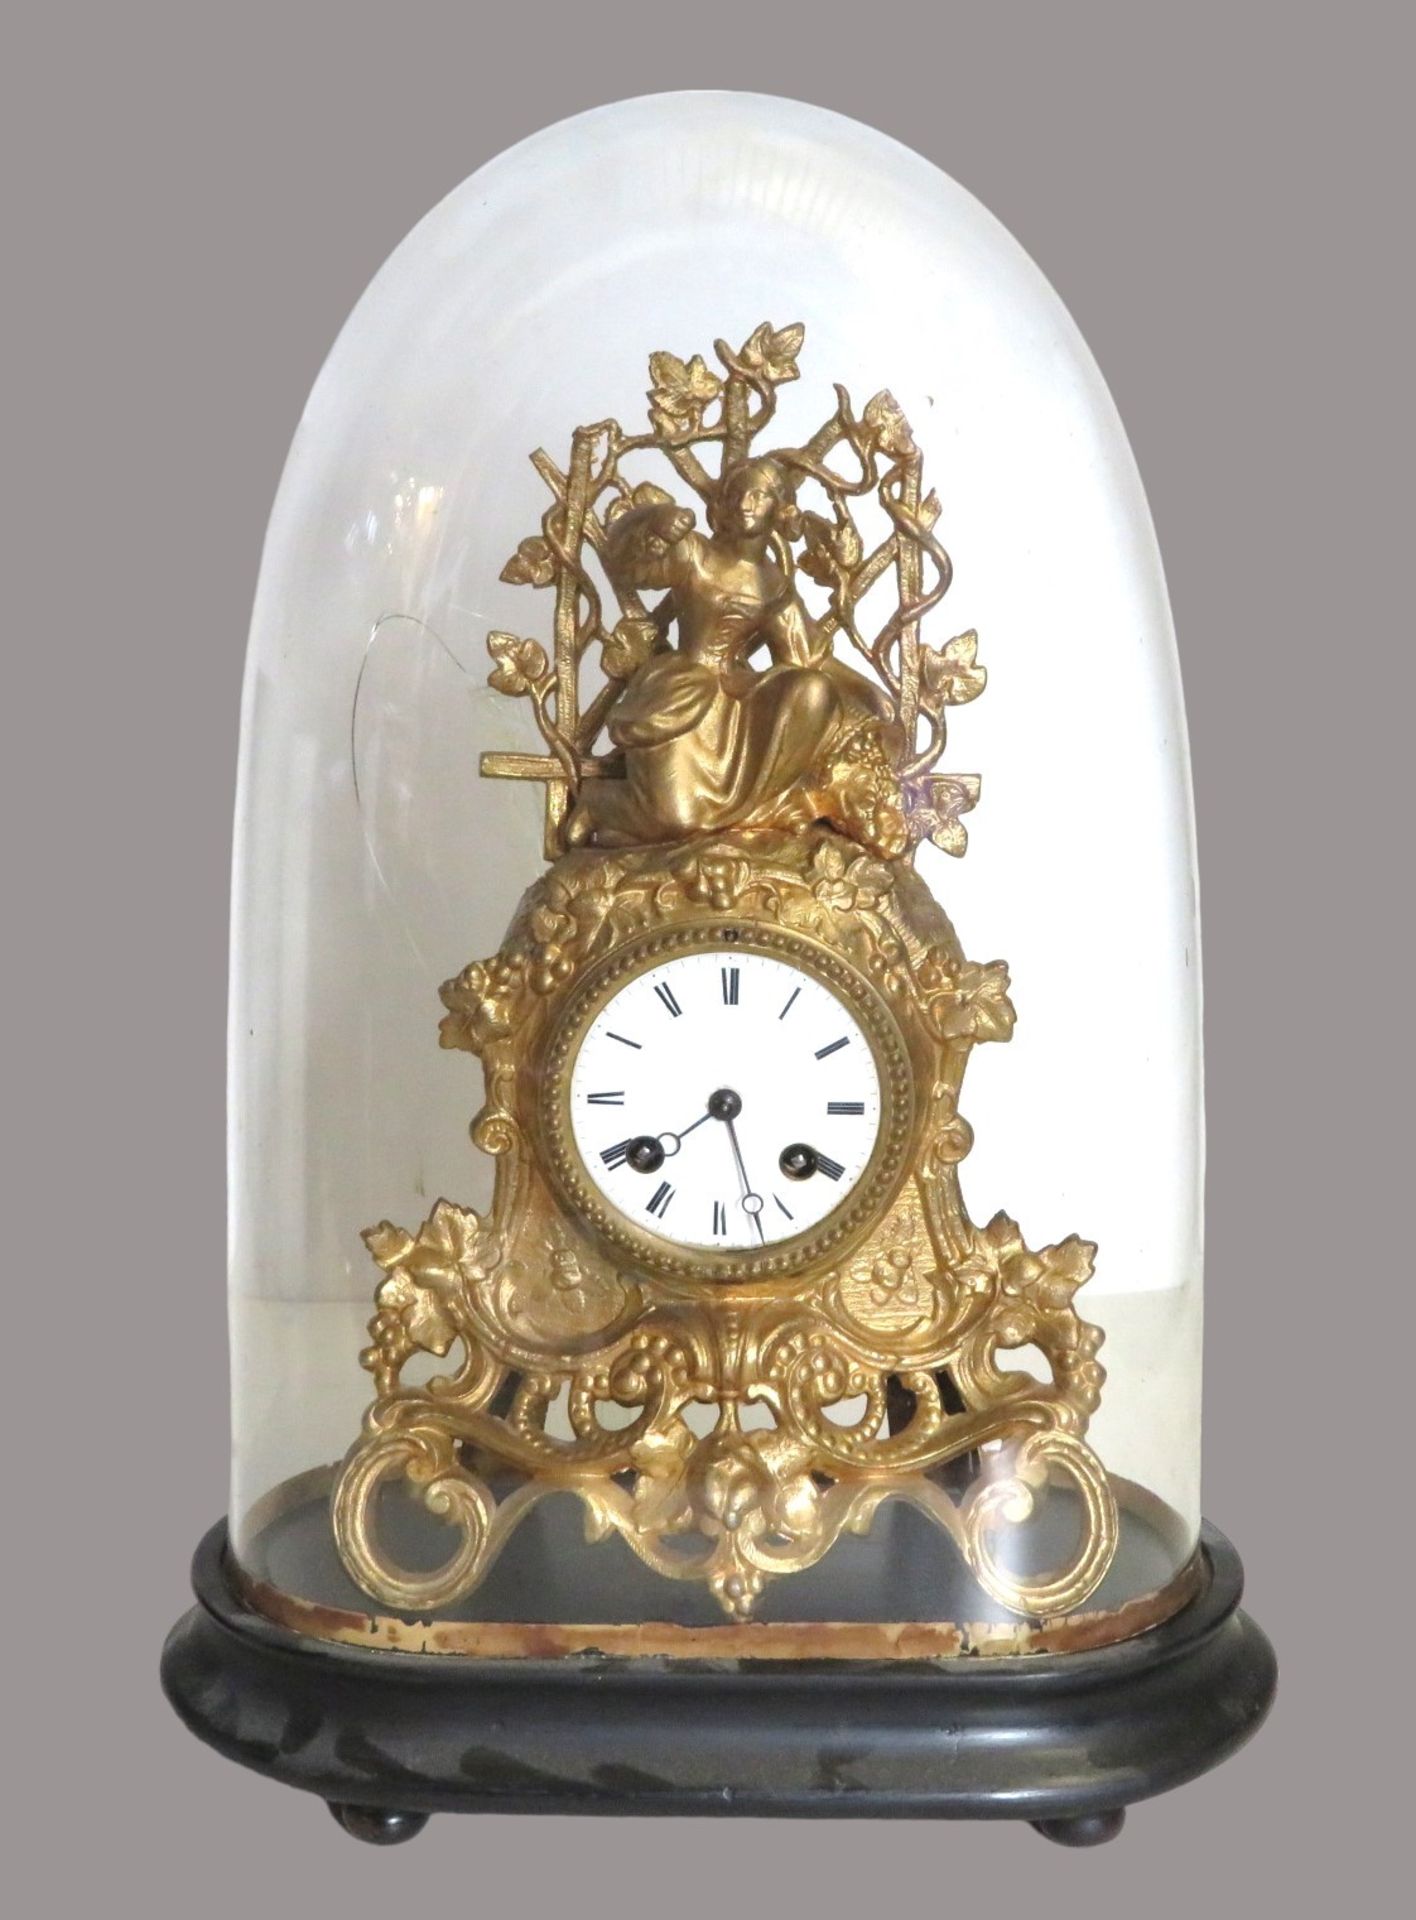 Pendule, Frankreich, 19. Jahrhundert, Zinkguss vergoldet, Perpendikel fehlt, farblose Glasstulpe (m